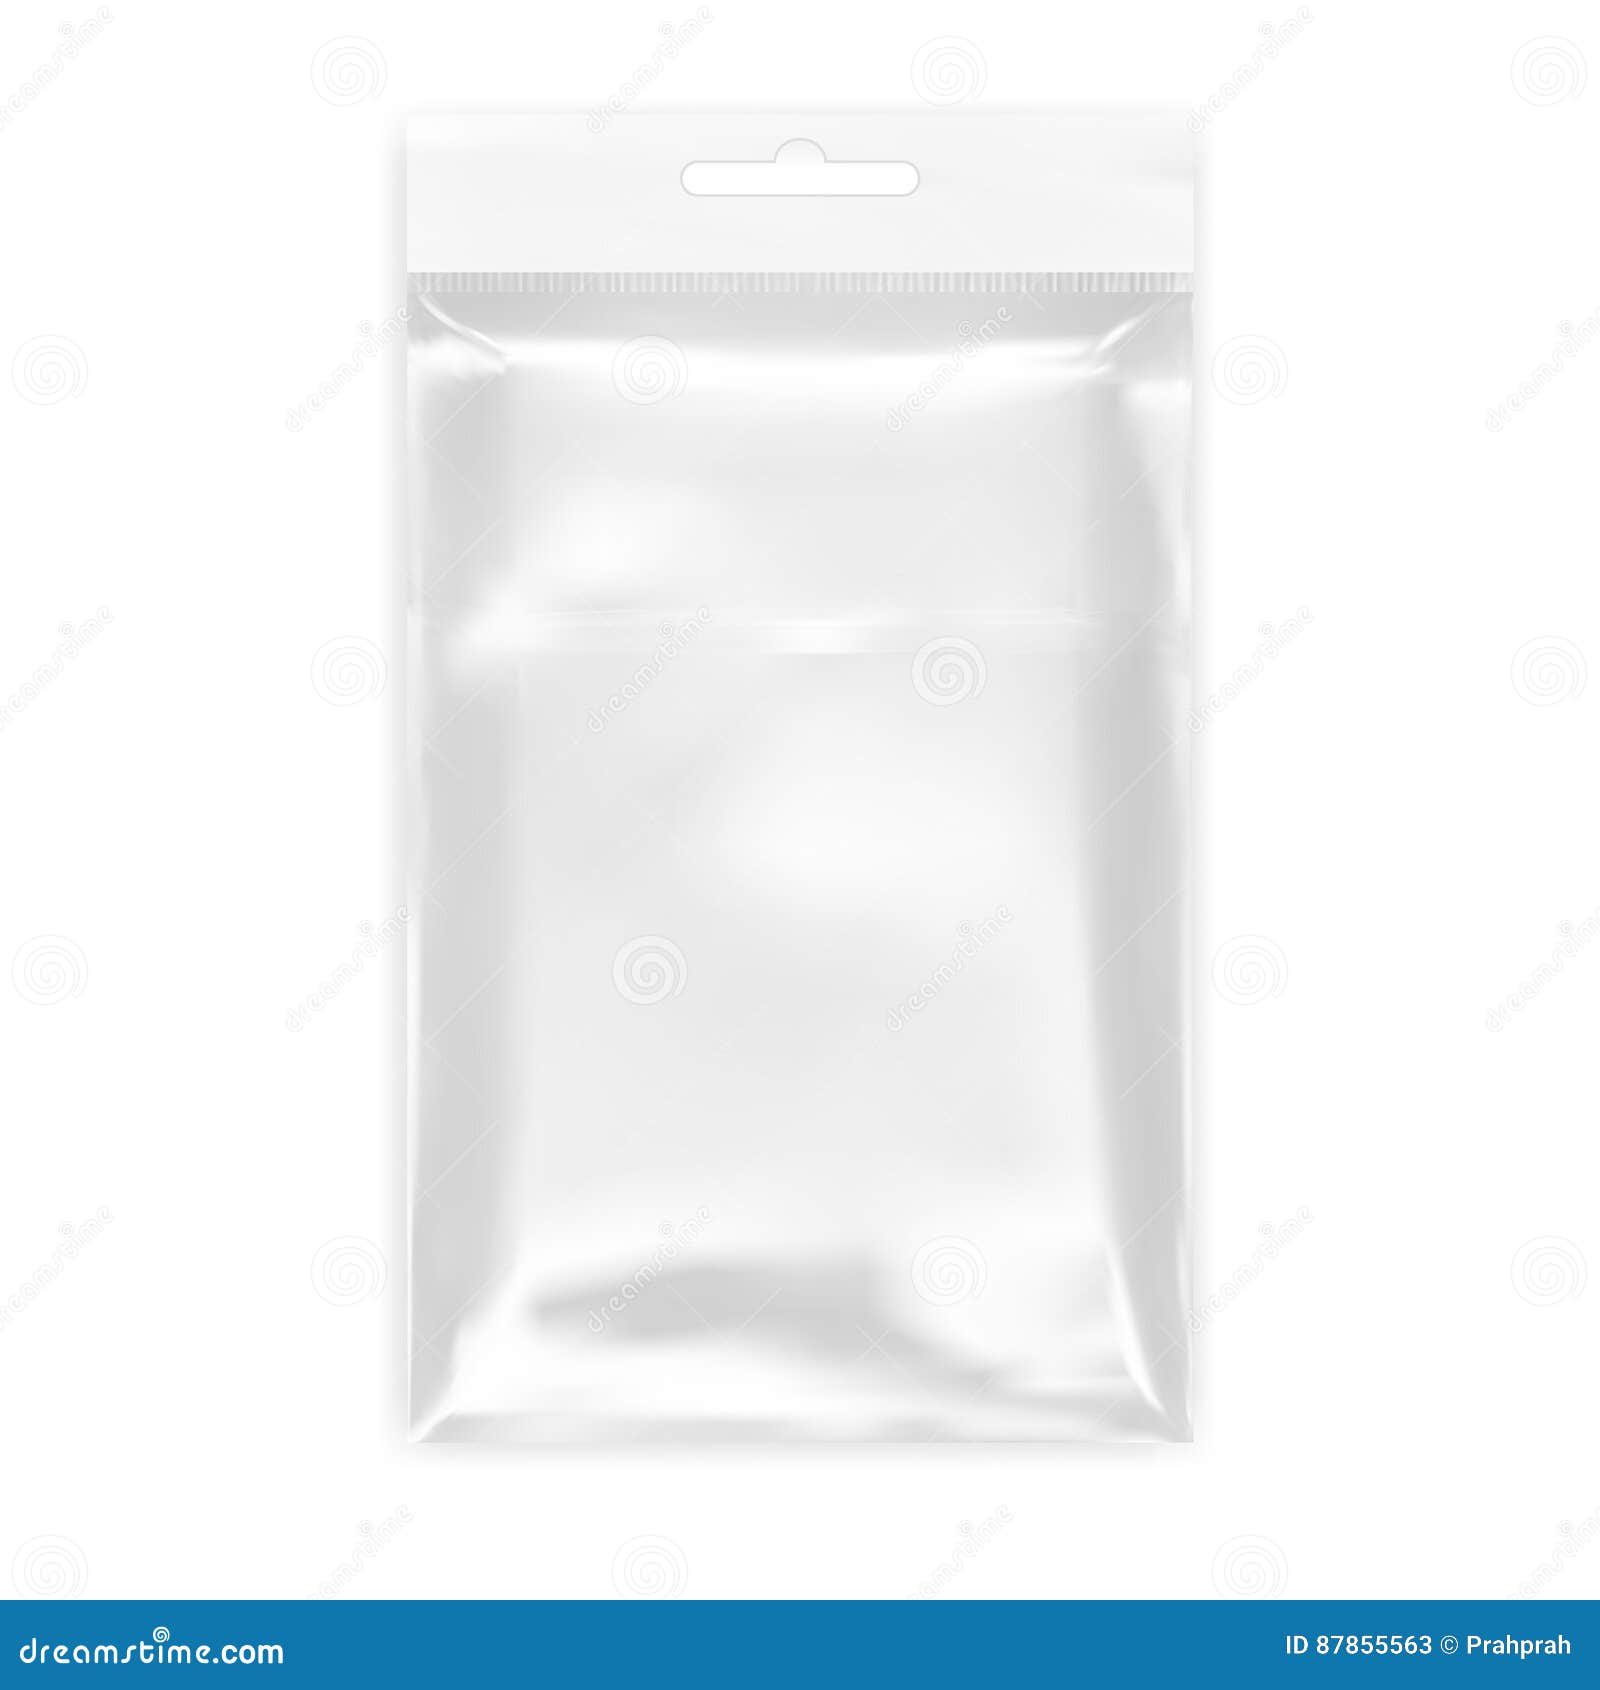 Download Transparent Blank Plastic Bag With Hang Slot Stock Image ...